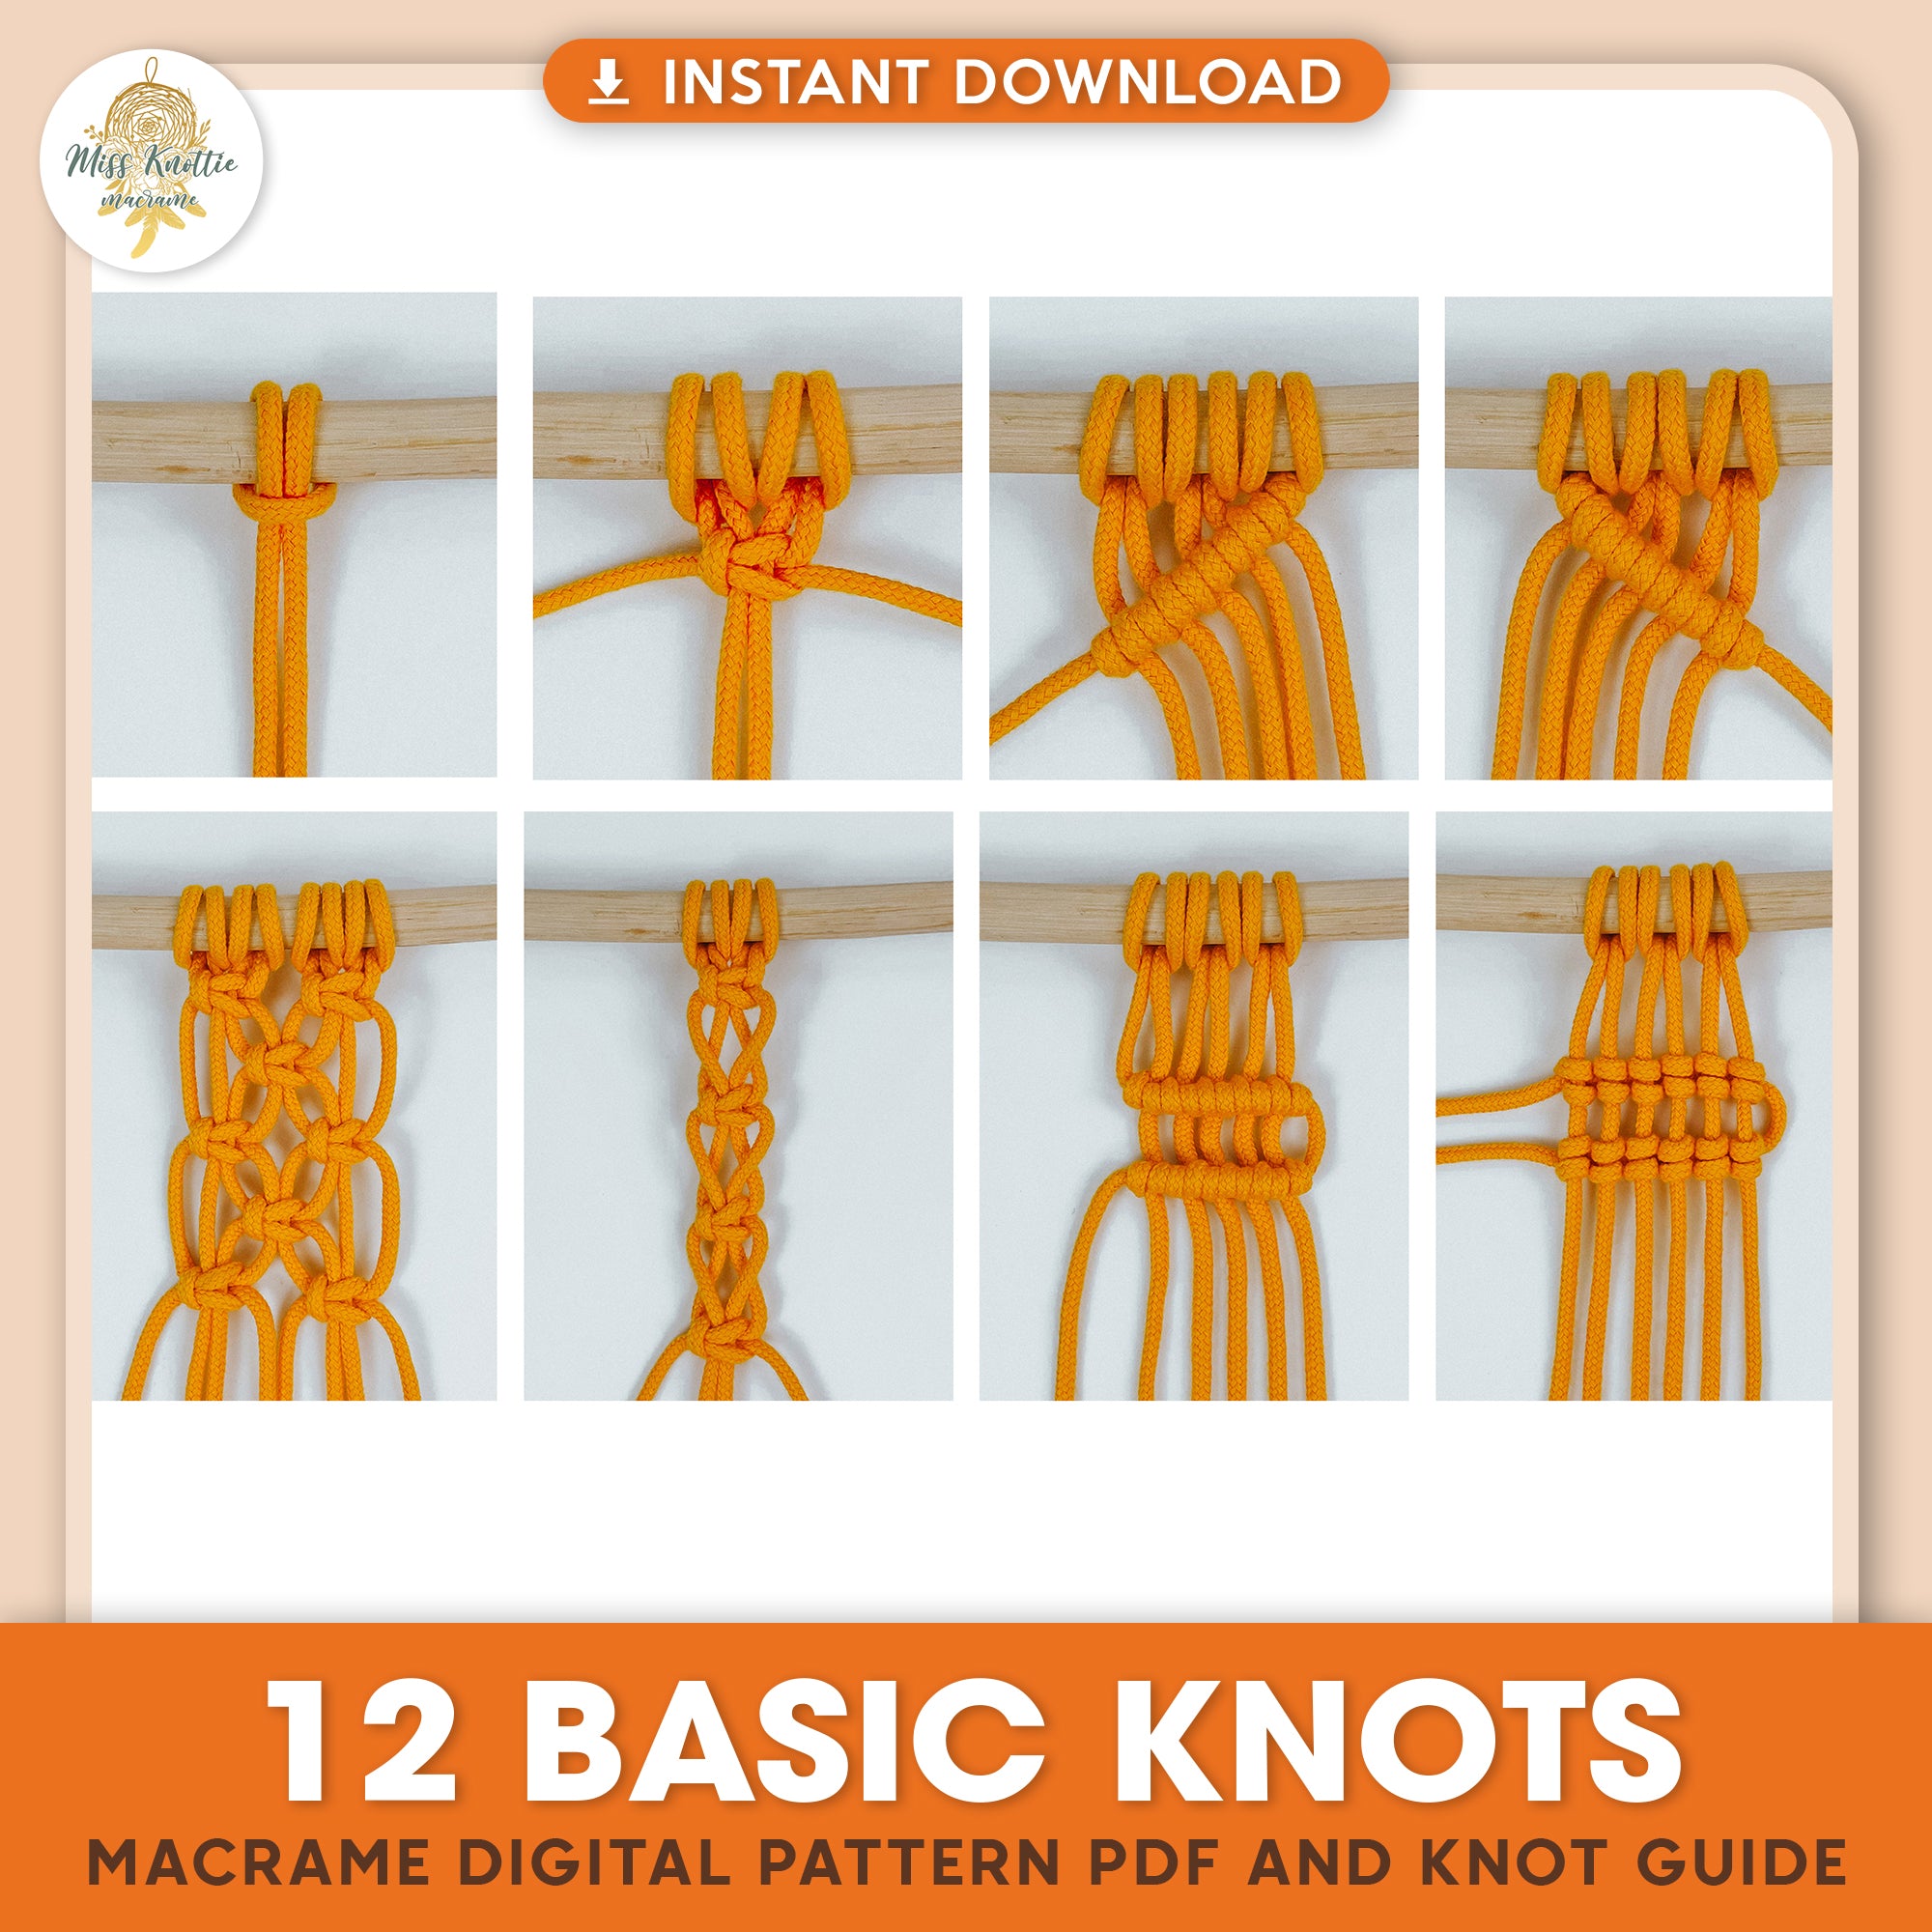 12 Macrame Basic Knots - Digital PDF and Knot Guide